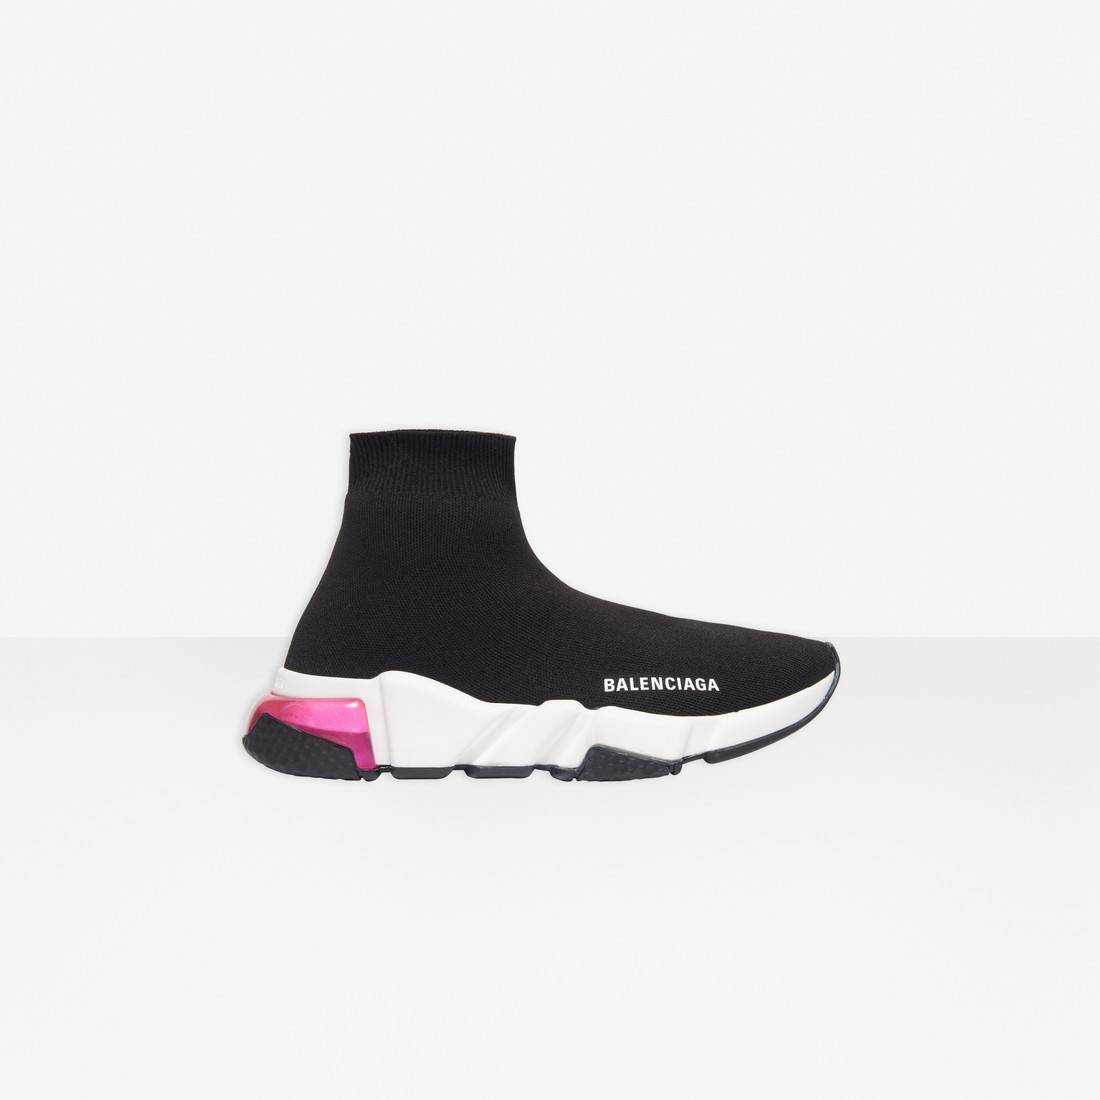 Balenciaga's Comfy and Cool Speed Sneaker - A Few Goody Gumdrops